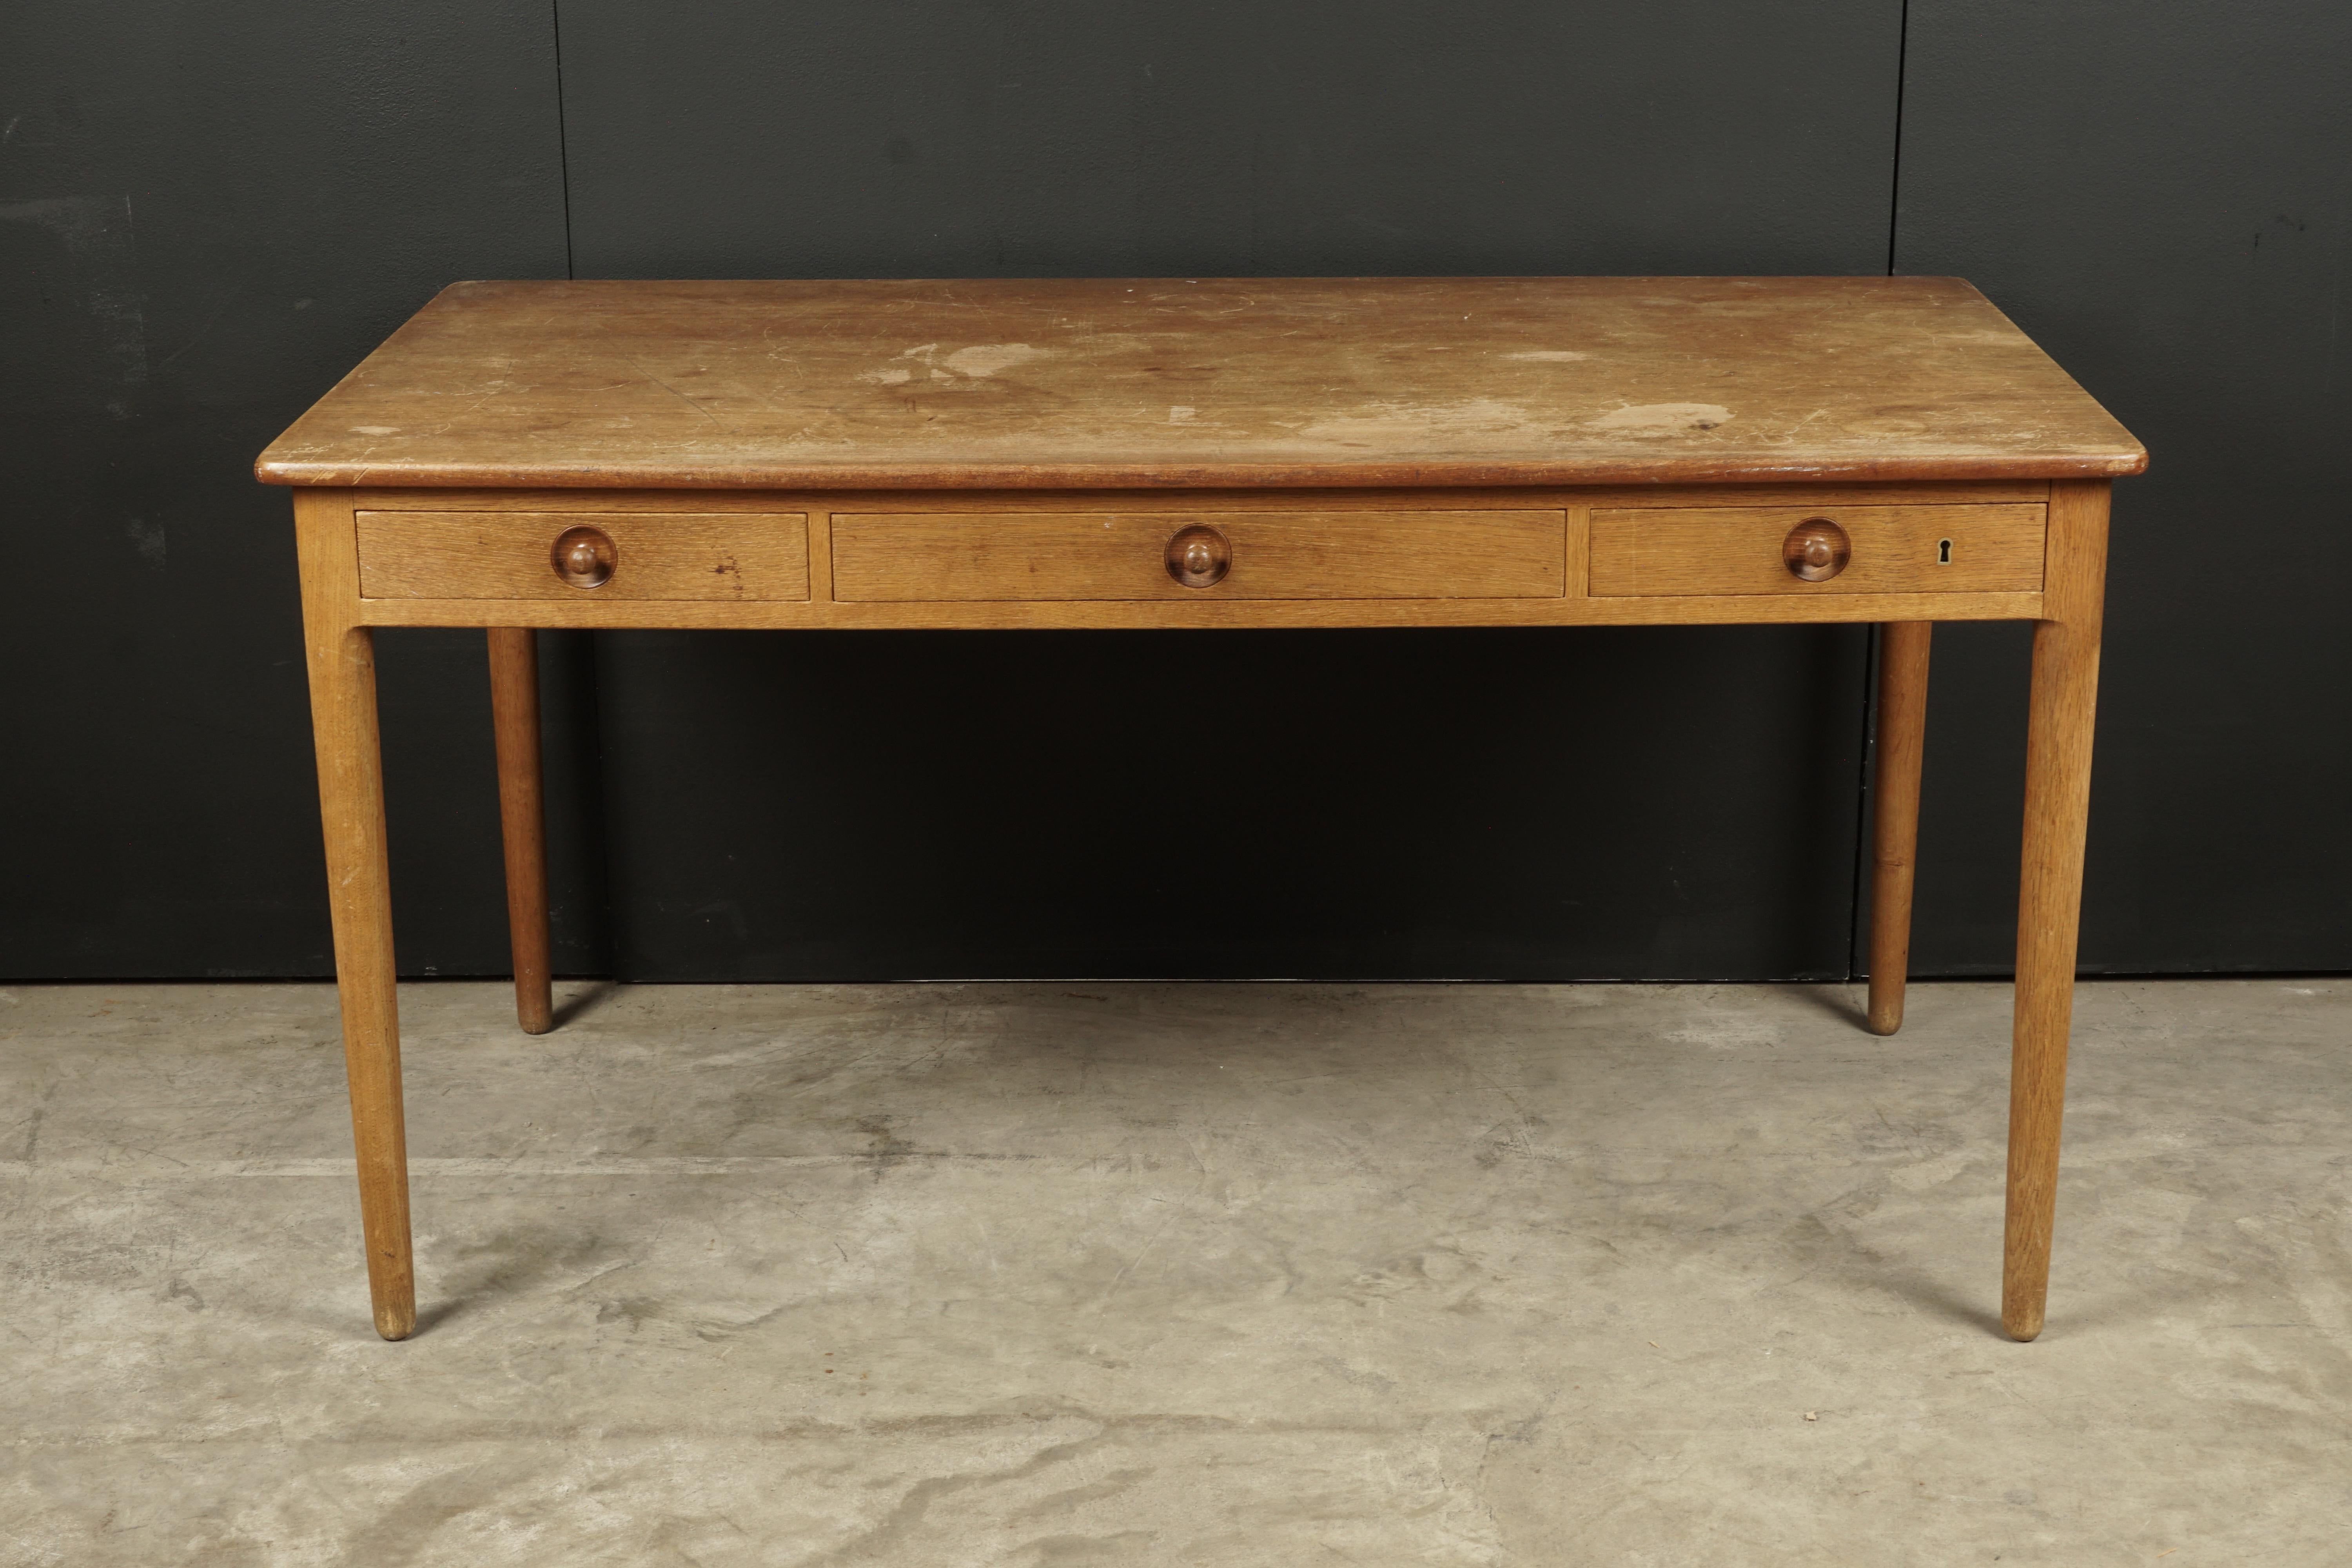 Rare Hans Wegner desk in oak, Model AT 305, from Denmark, circa 1960. Three drawer model in solid oak construction. Manufactured by Andres Tuck, Denmark.